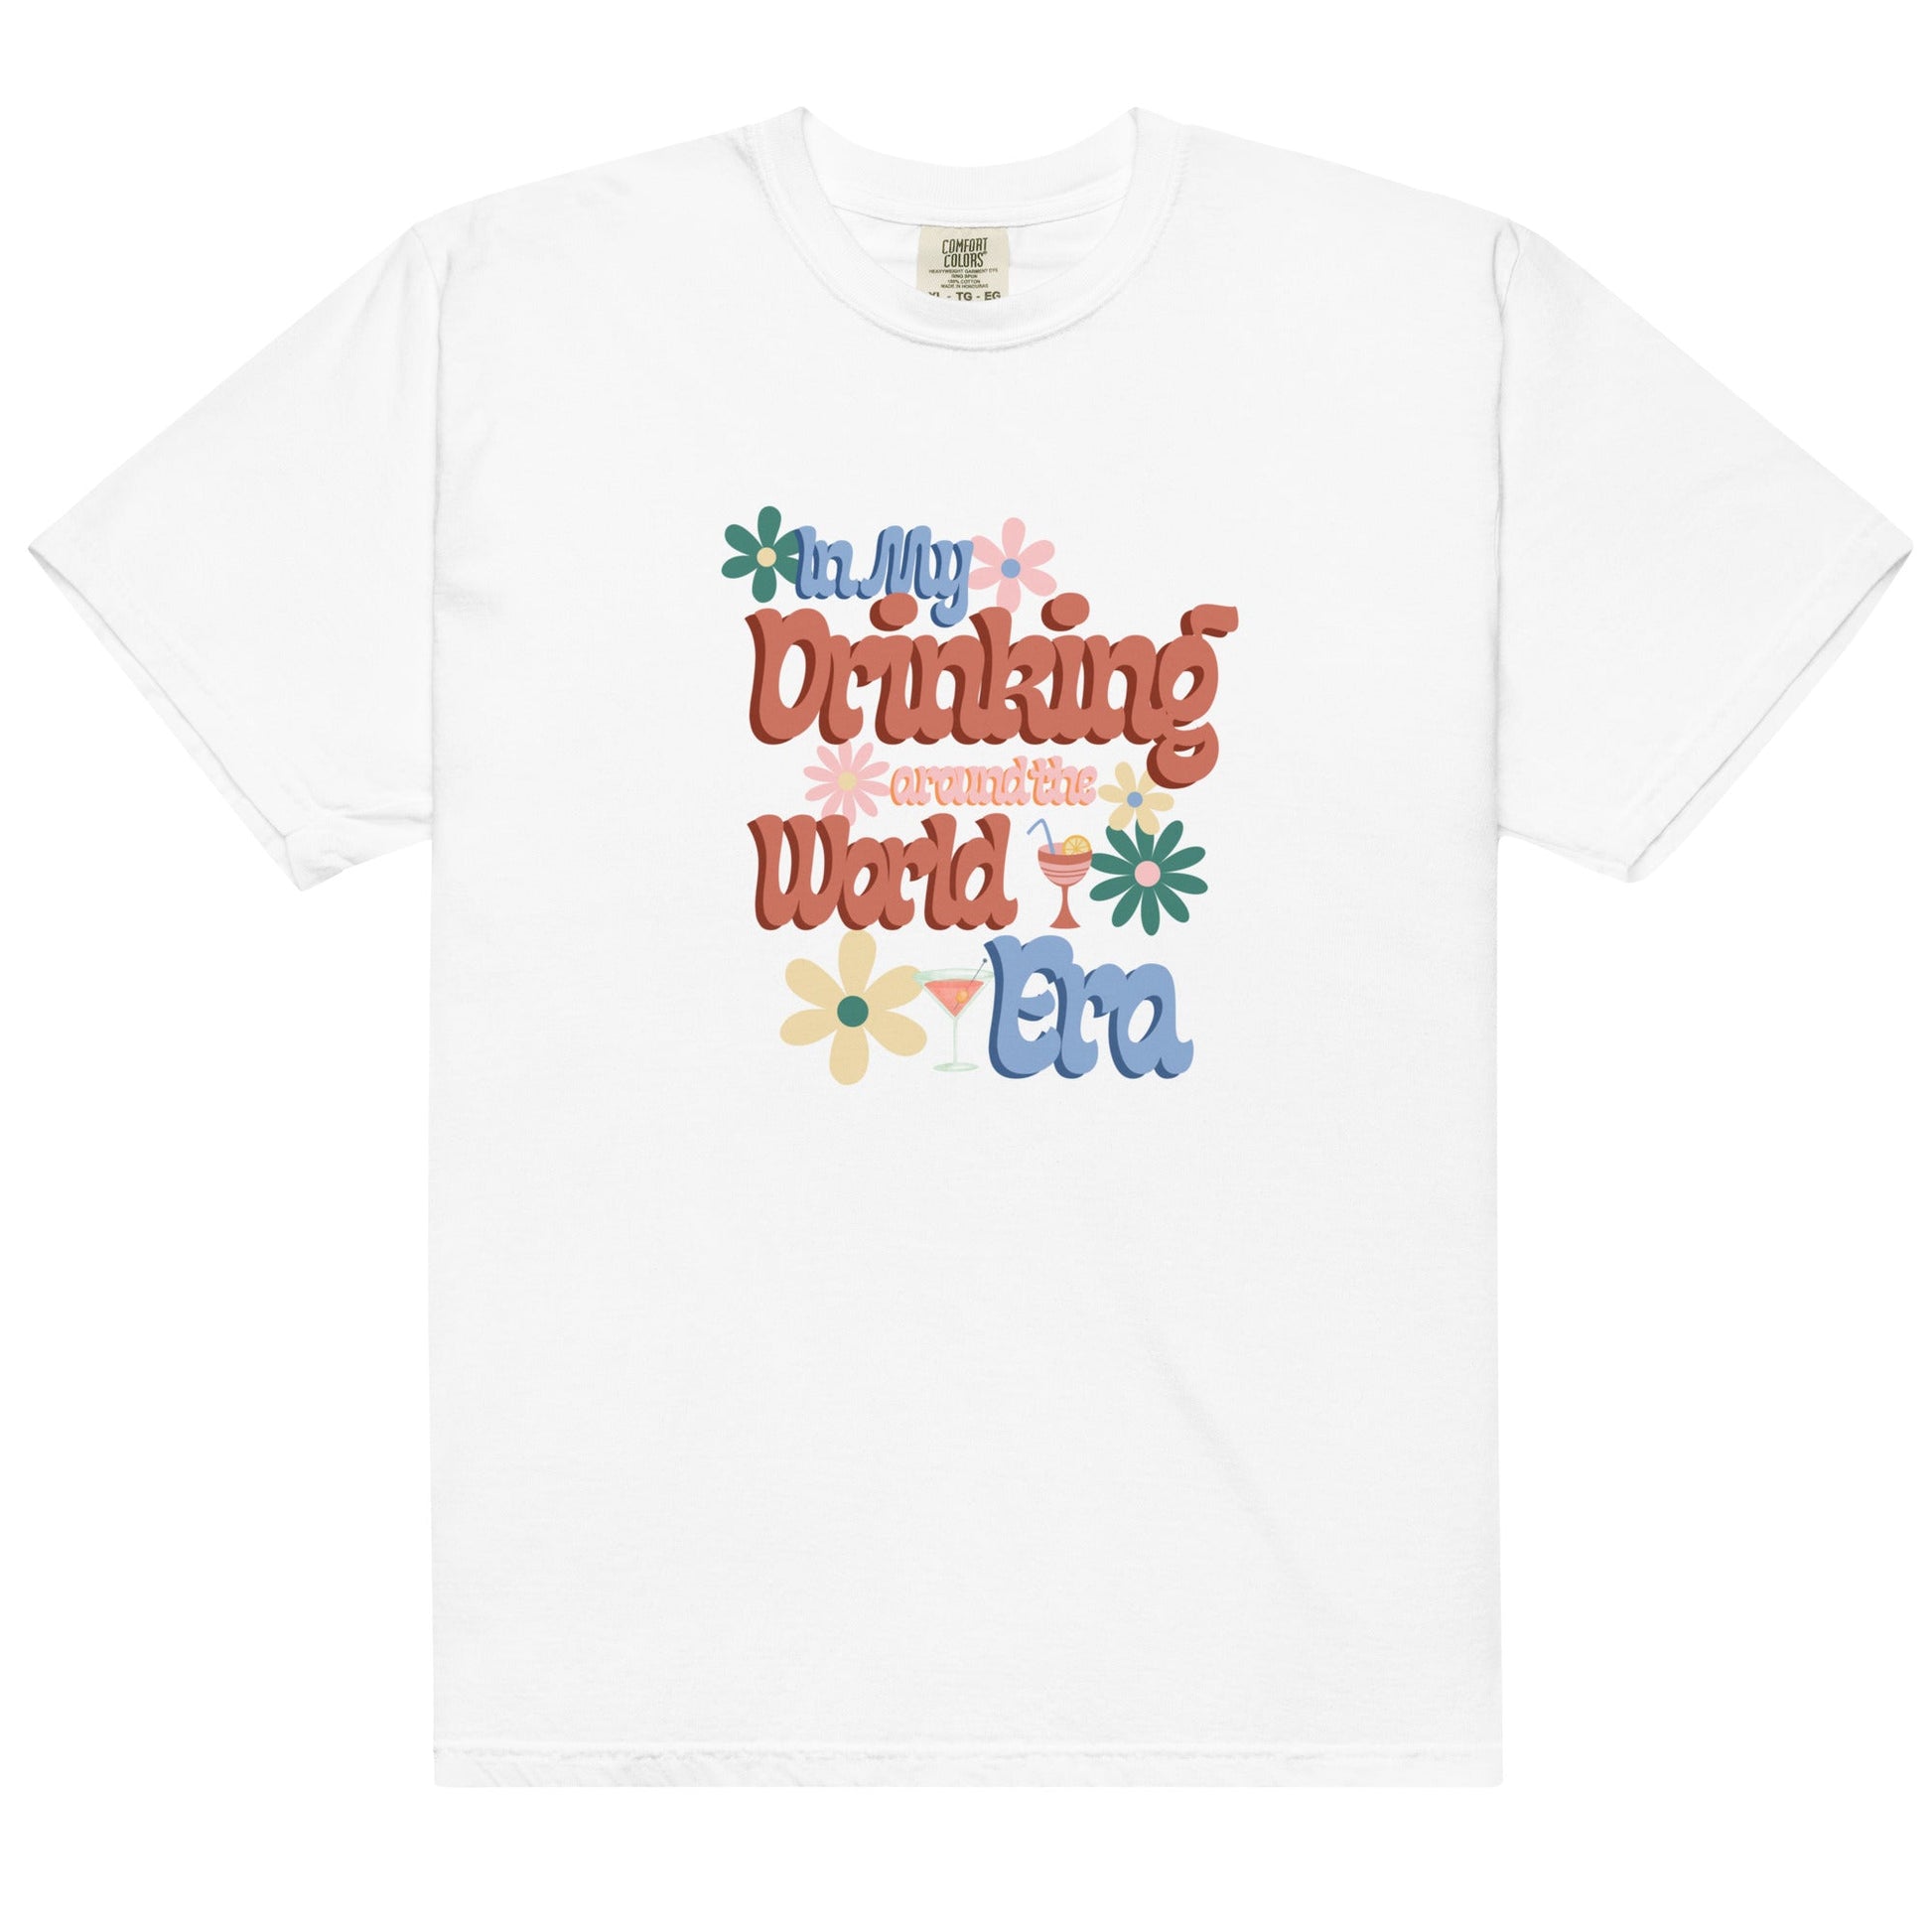 Drinking around the World Retro garment-dyed heavyweight t-shirt adult disney shirtadult disney topadult epcot top#tag4##tag5##tag6#